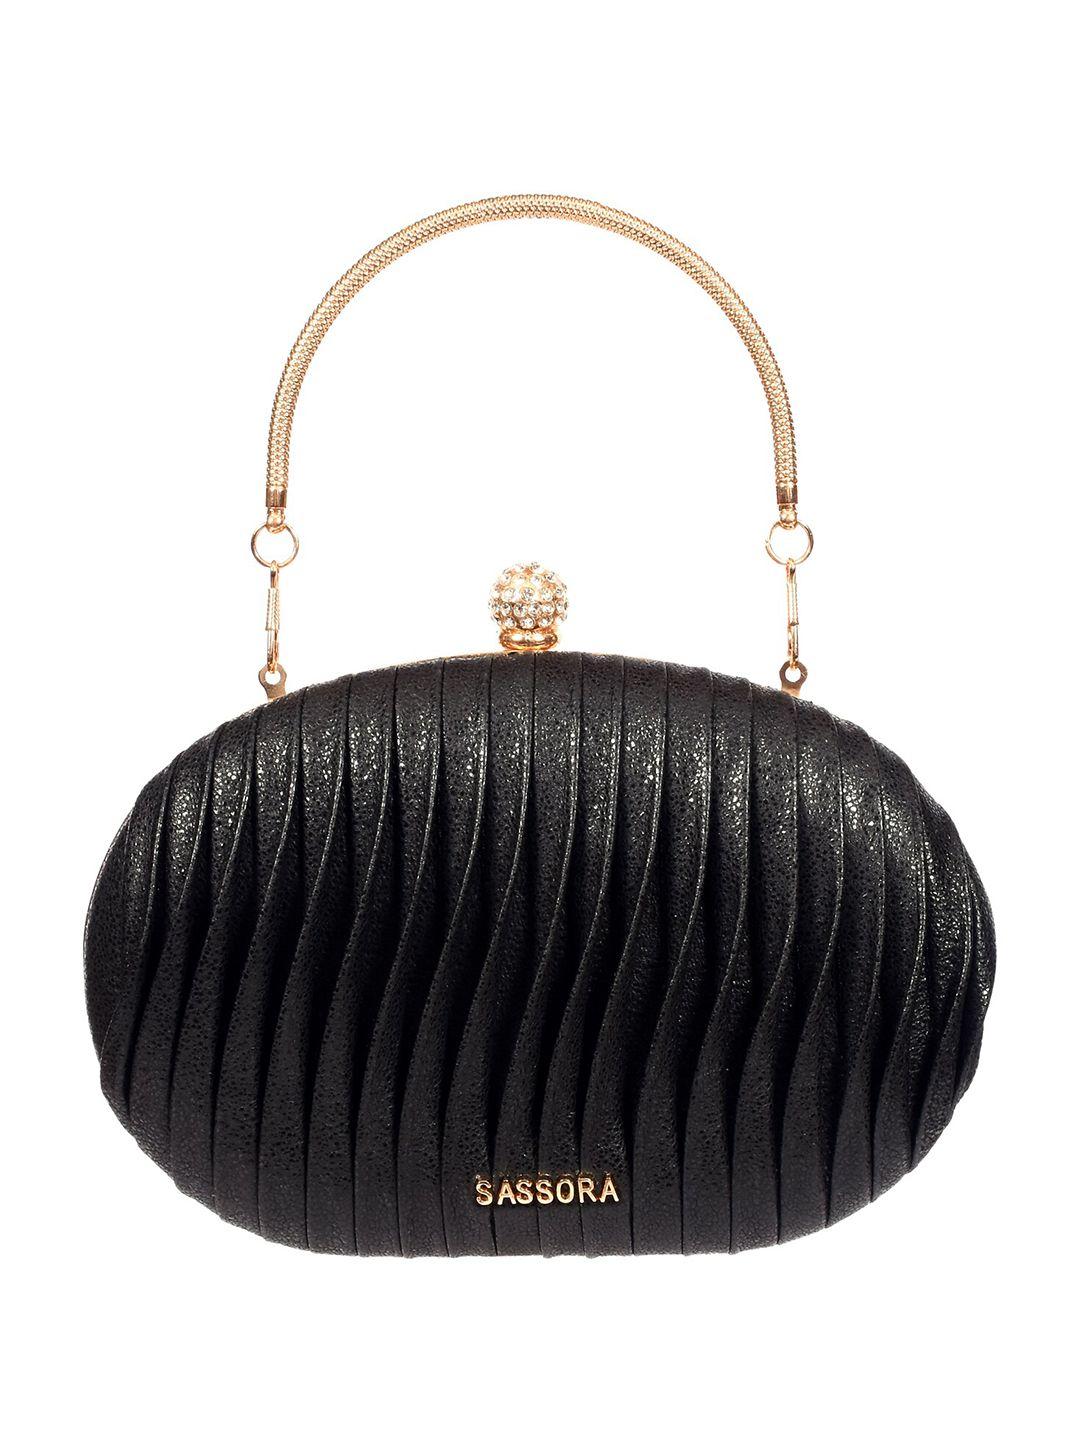 sassora black embellished box clutch